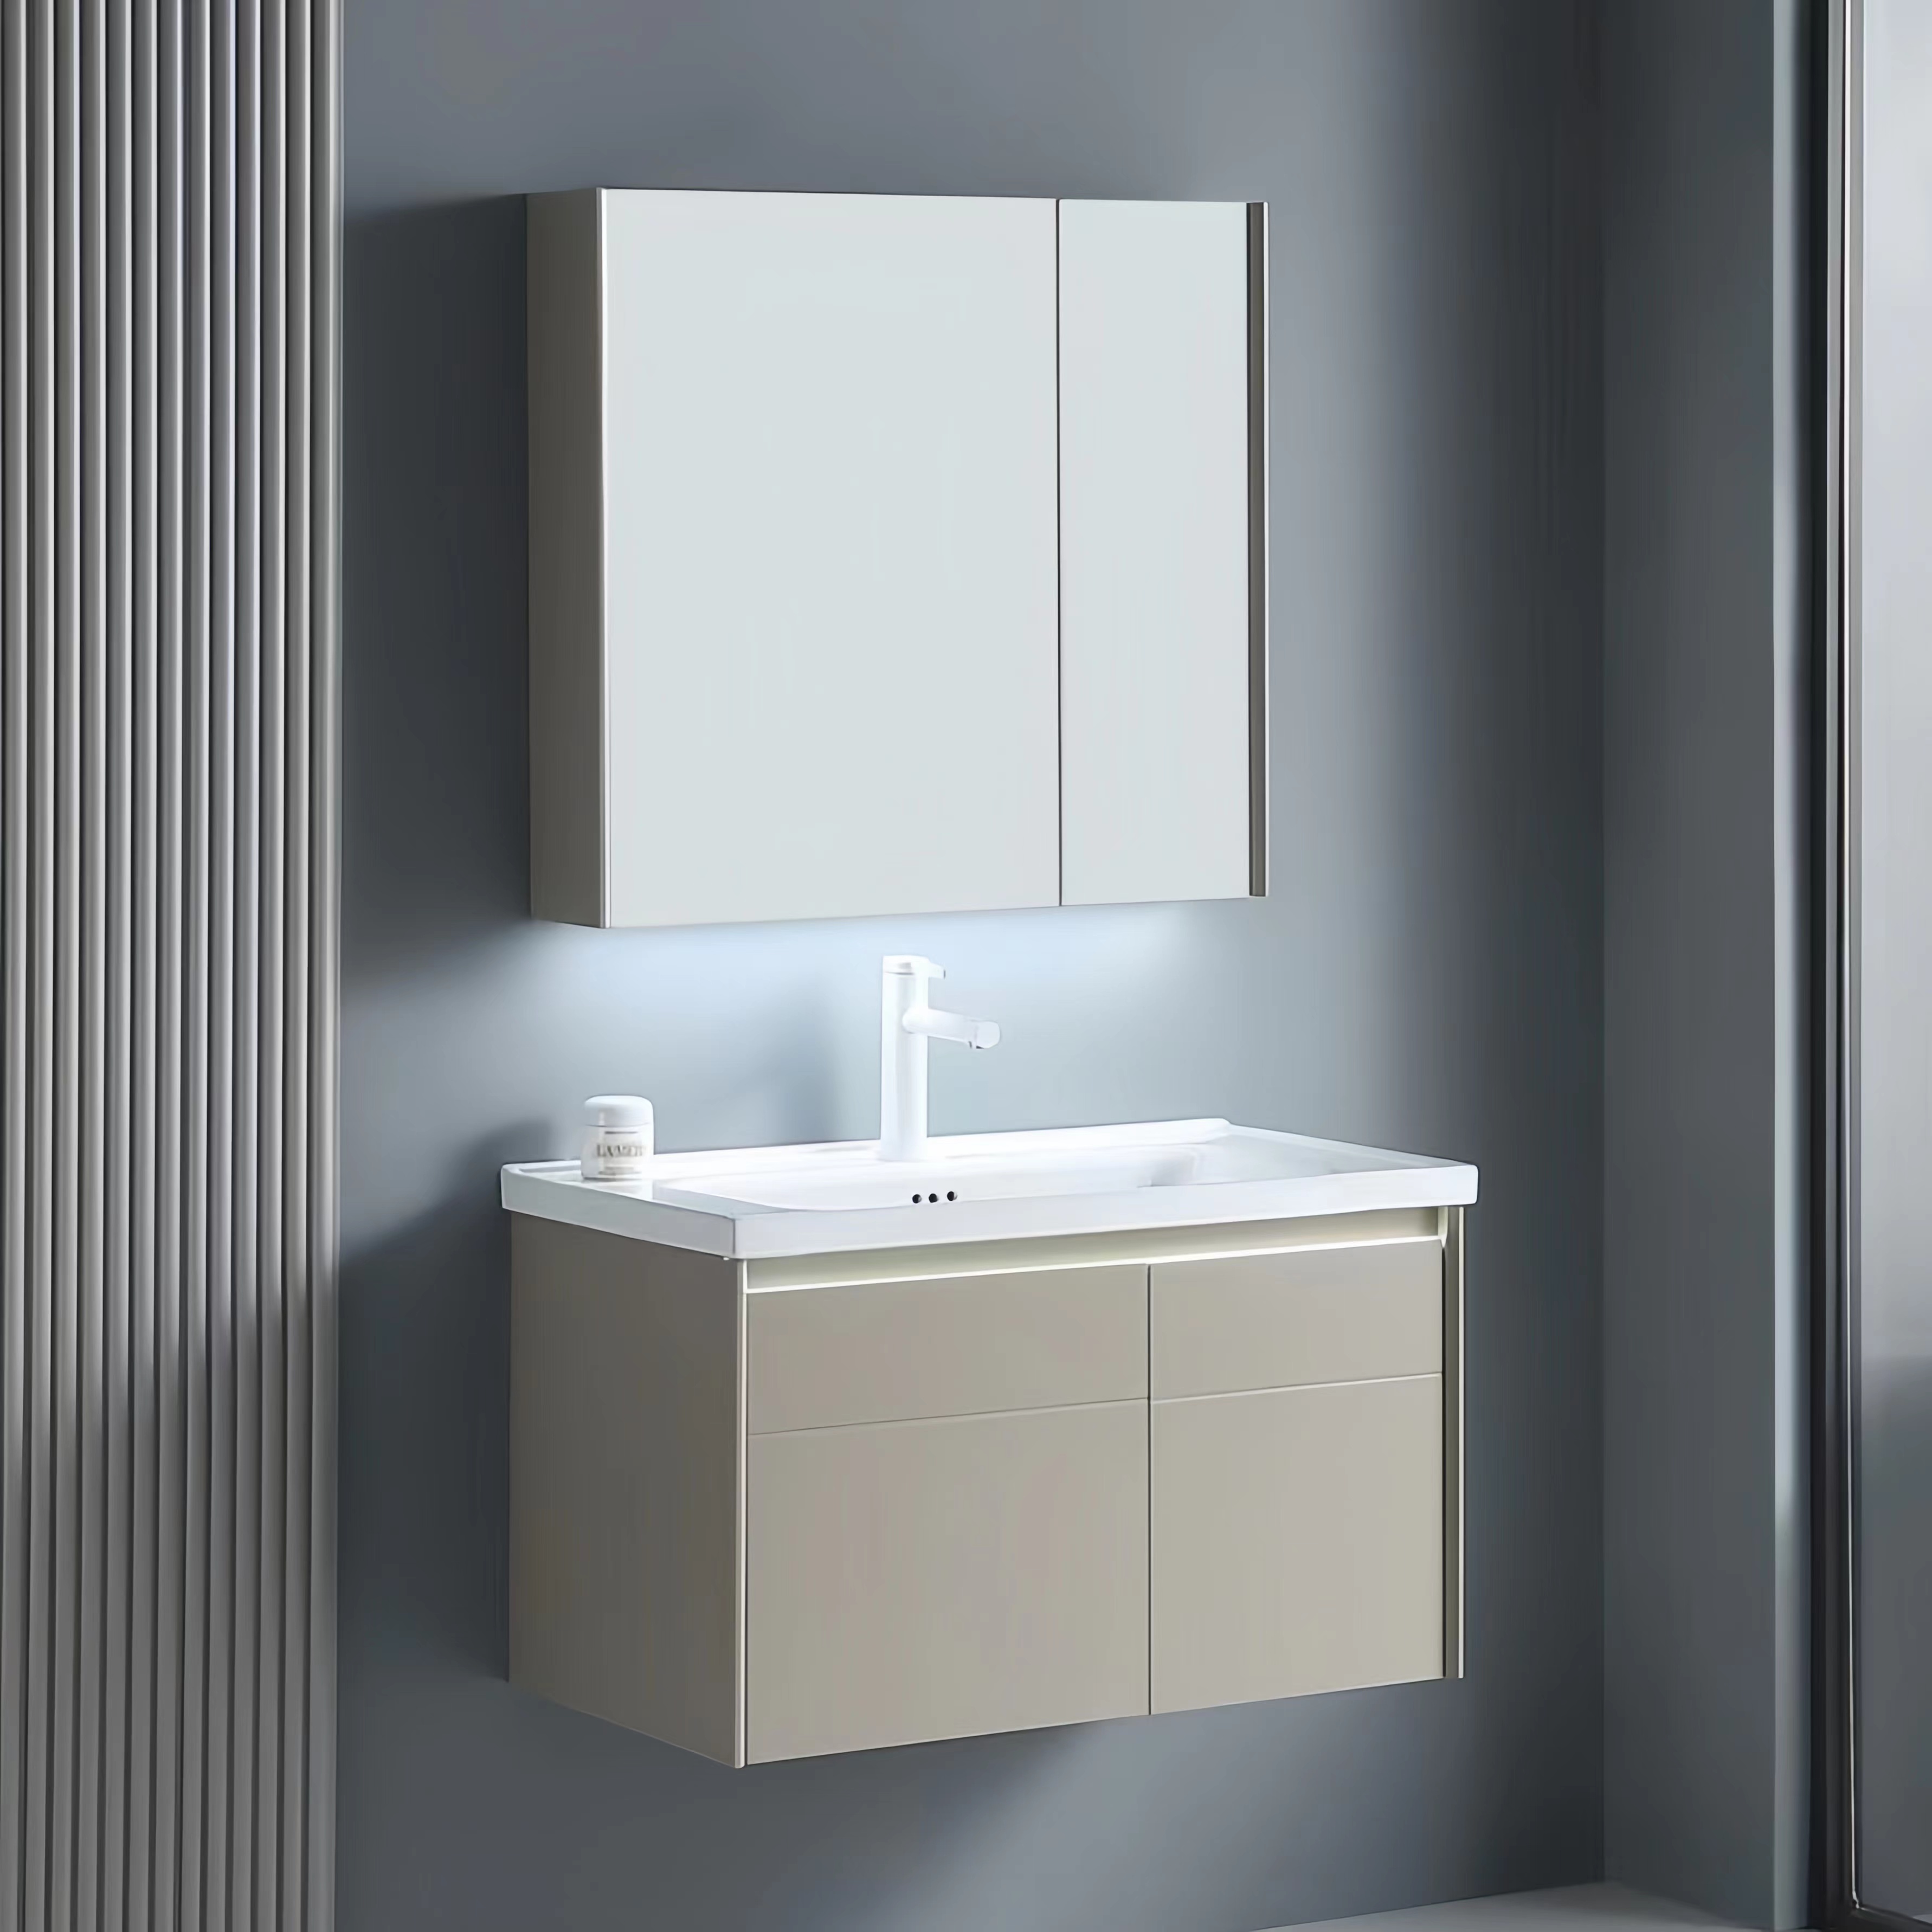 Factory Direct Sale top quality new design plywood bathroom cabinet single sink mirror bathroom vanity